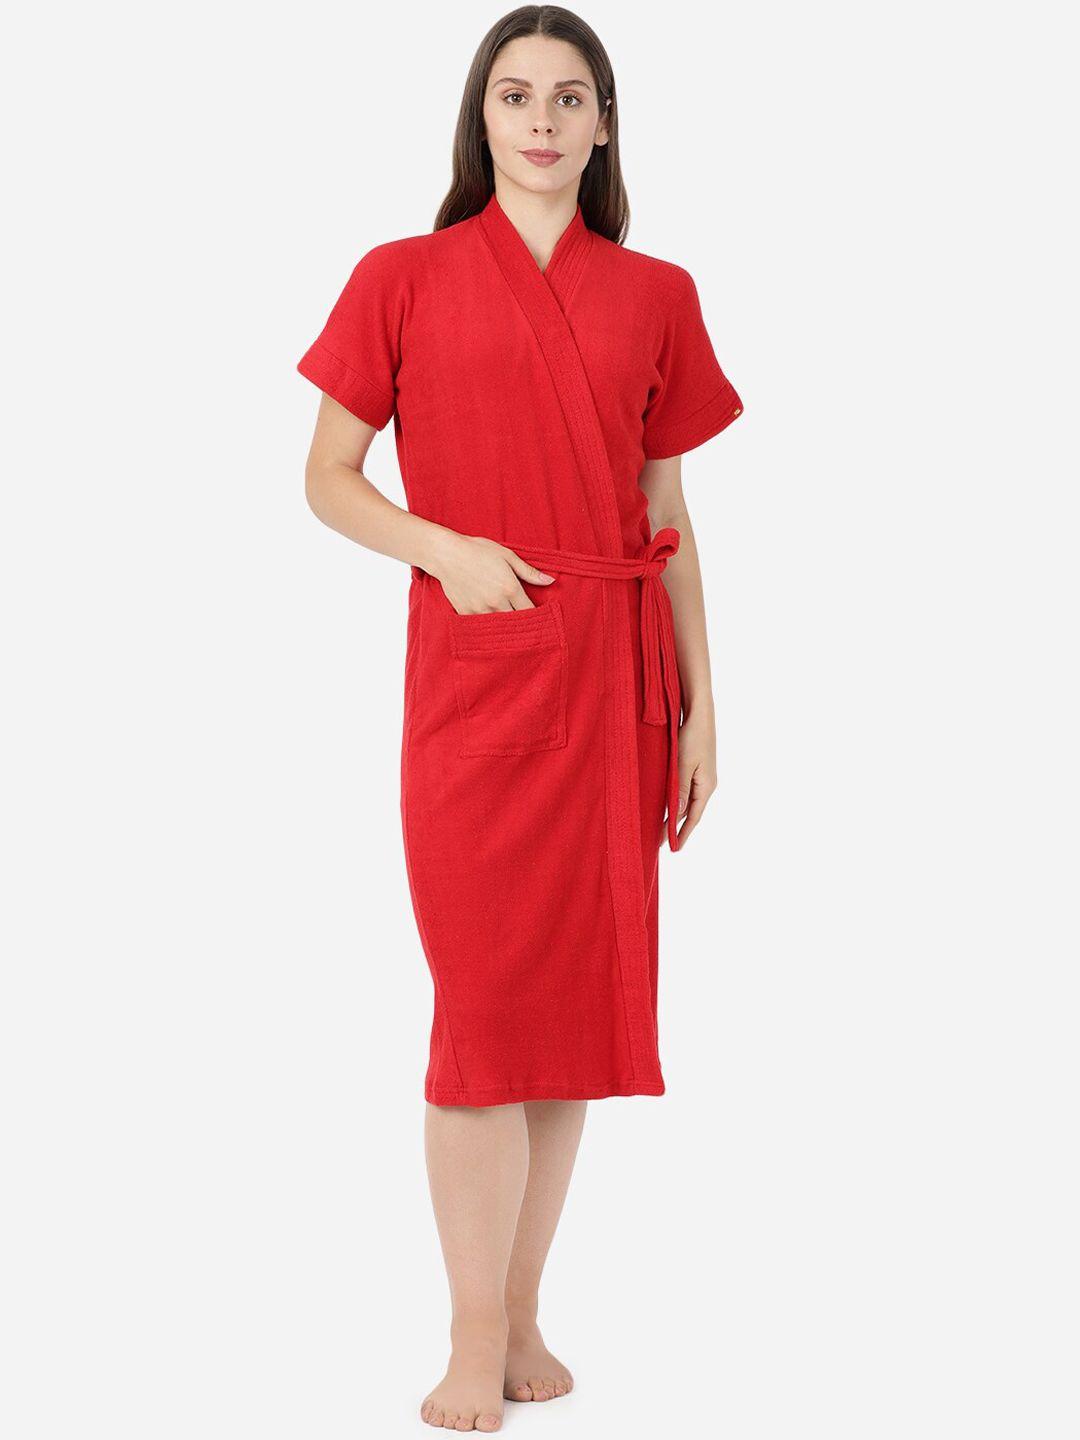 goldstroms women red solid cotton bath robe